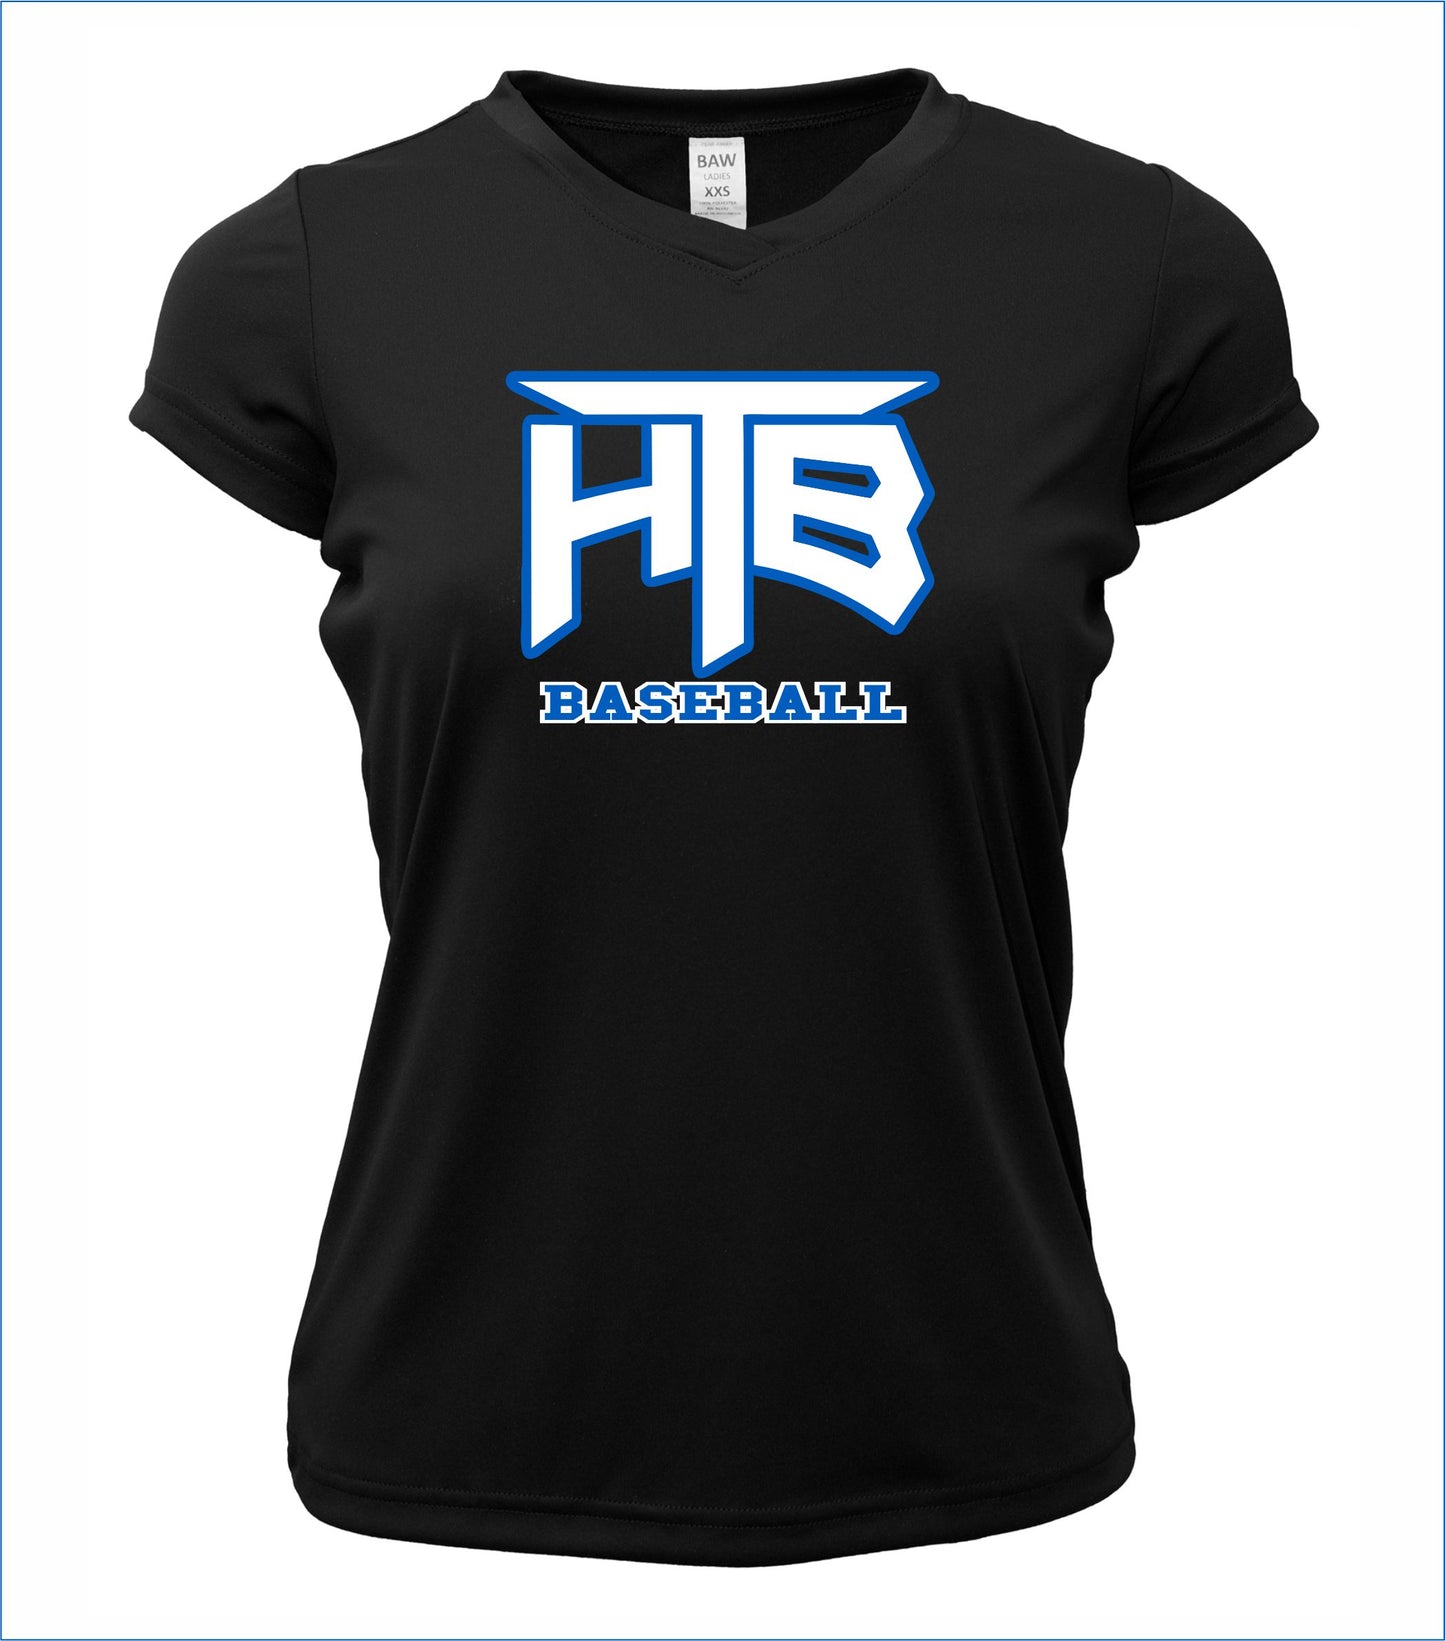 HTB Baseball Ladies Short Sleeve V-Neck Dri-Fit T-Shirt